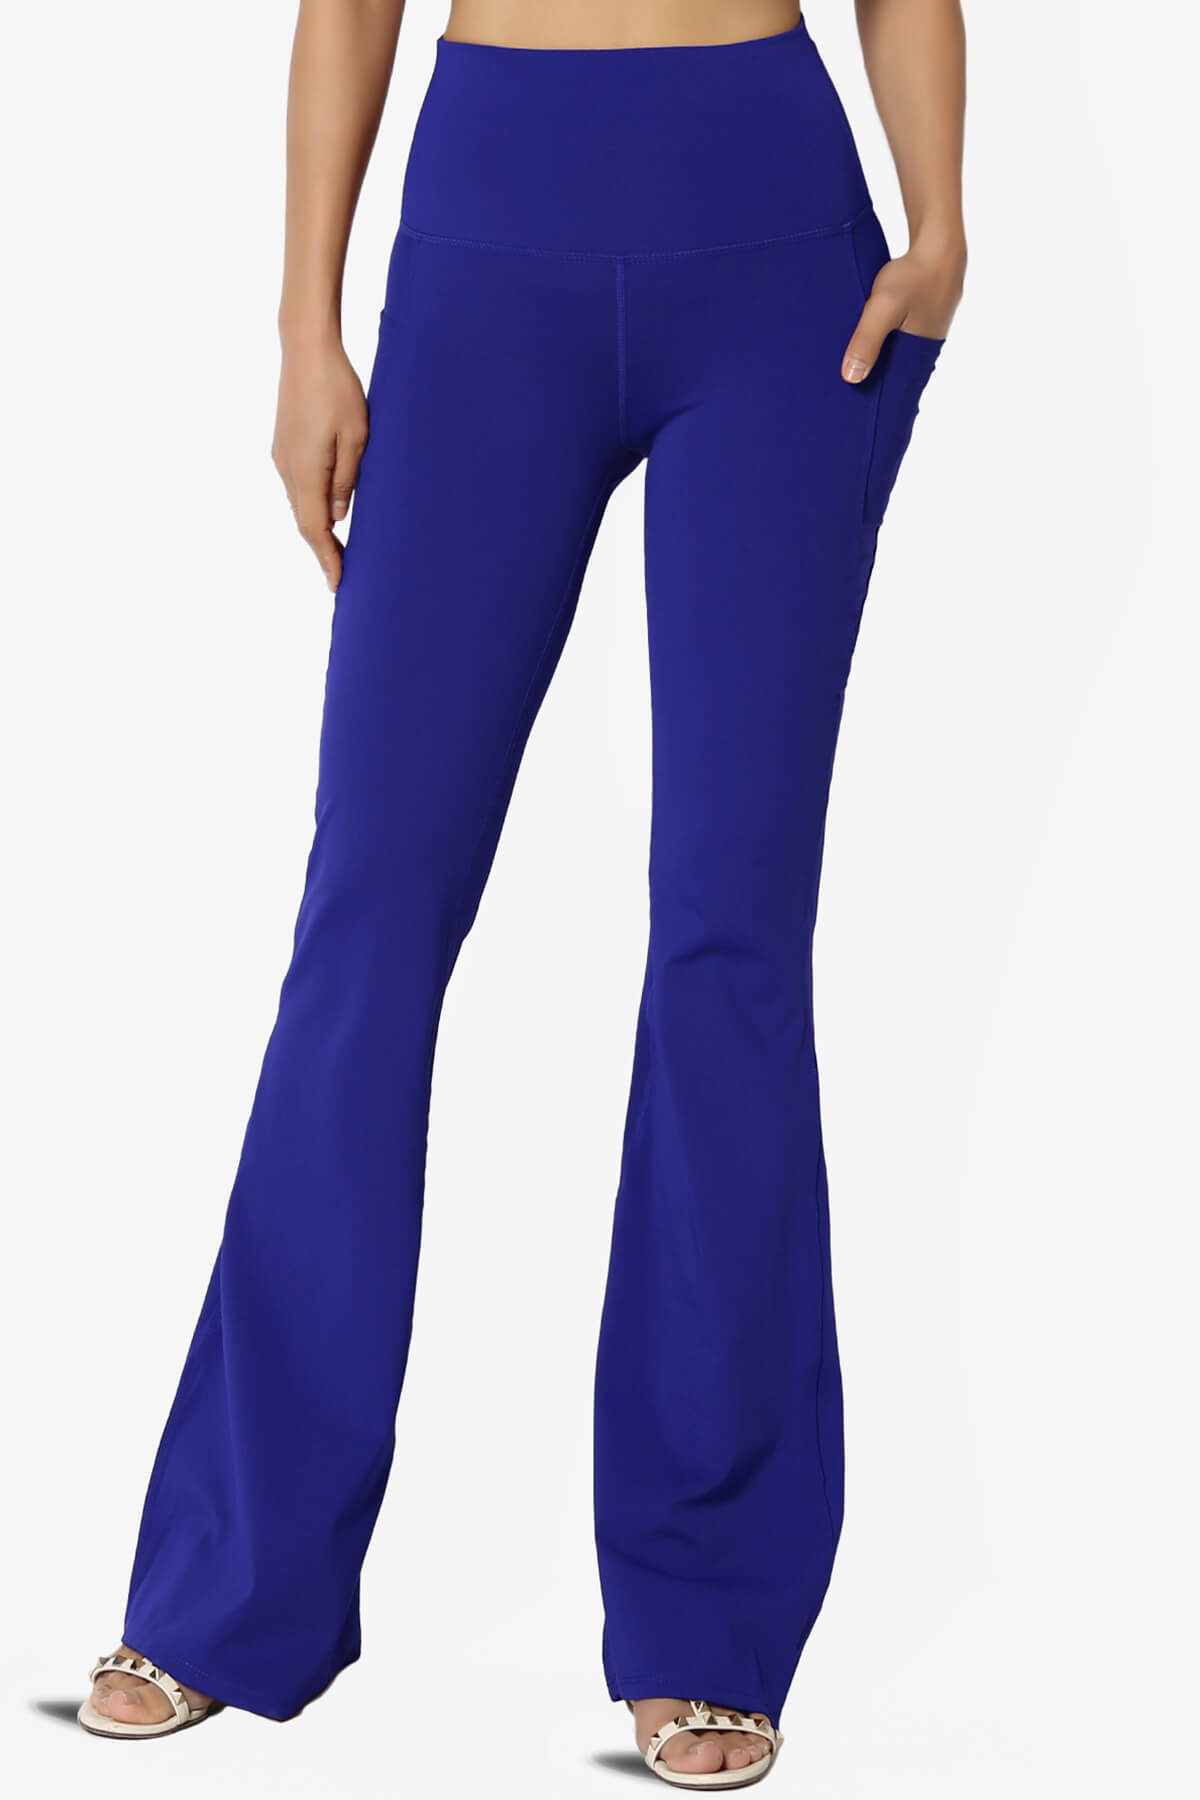 Gemma Athletic Pocket Flare Yoga Pants BRIGHT BLUE_1